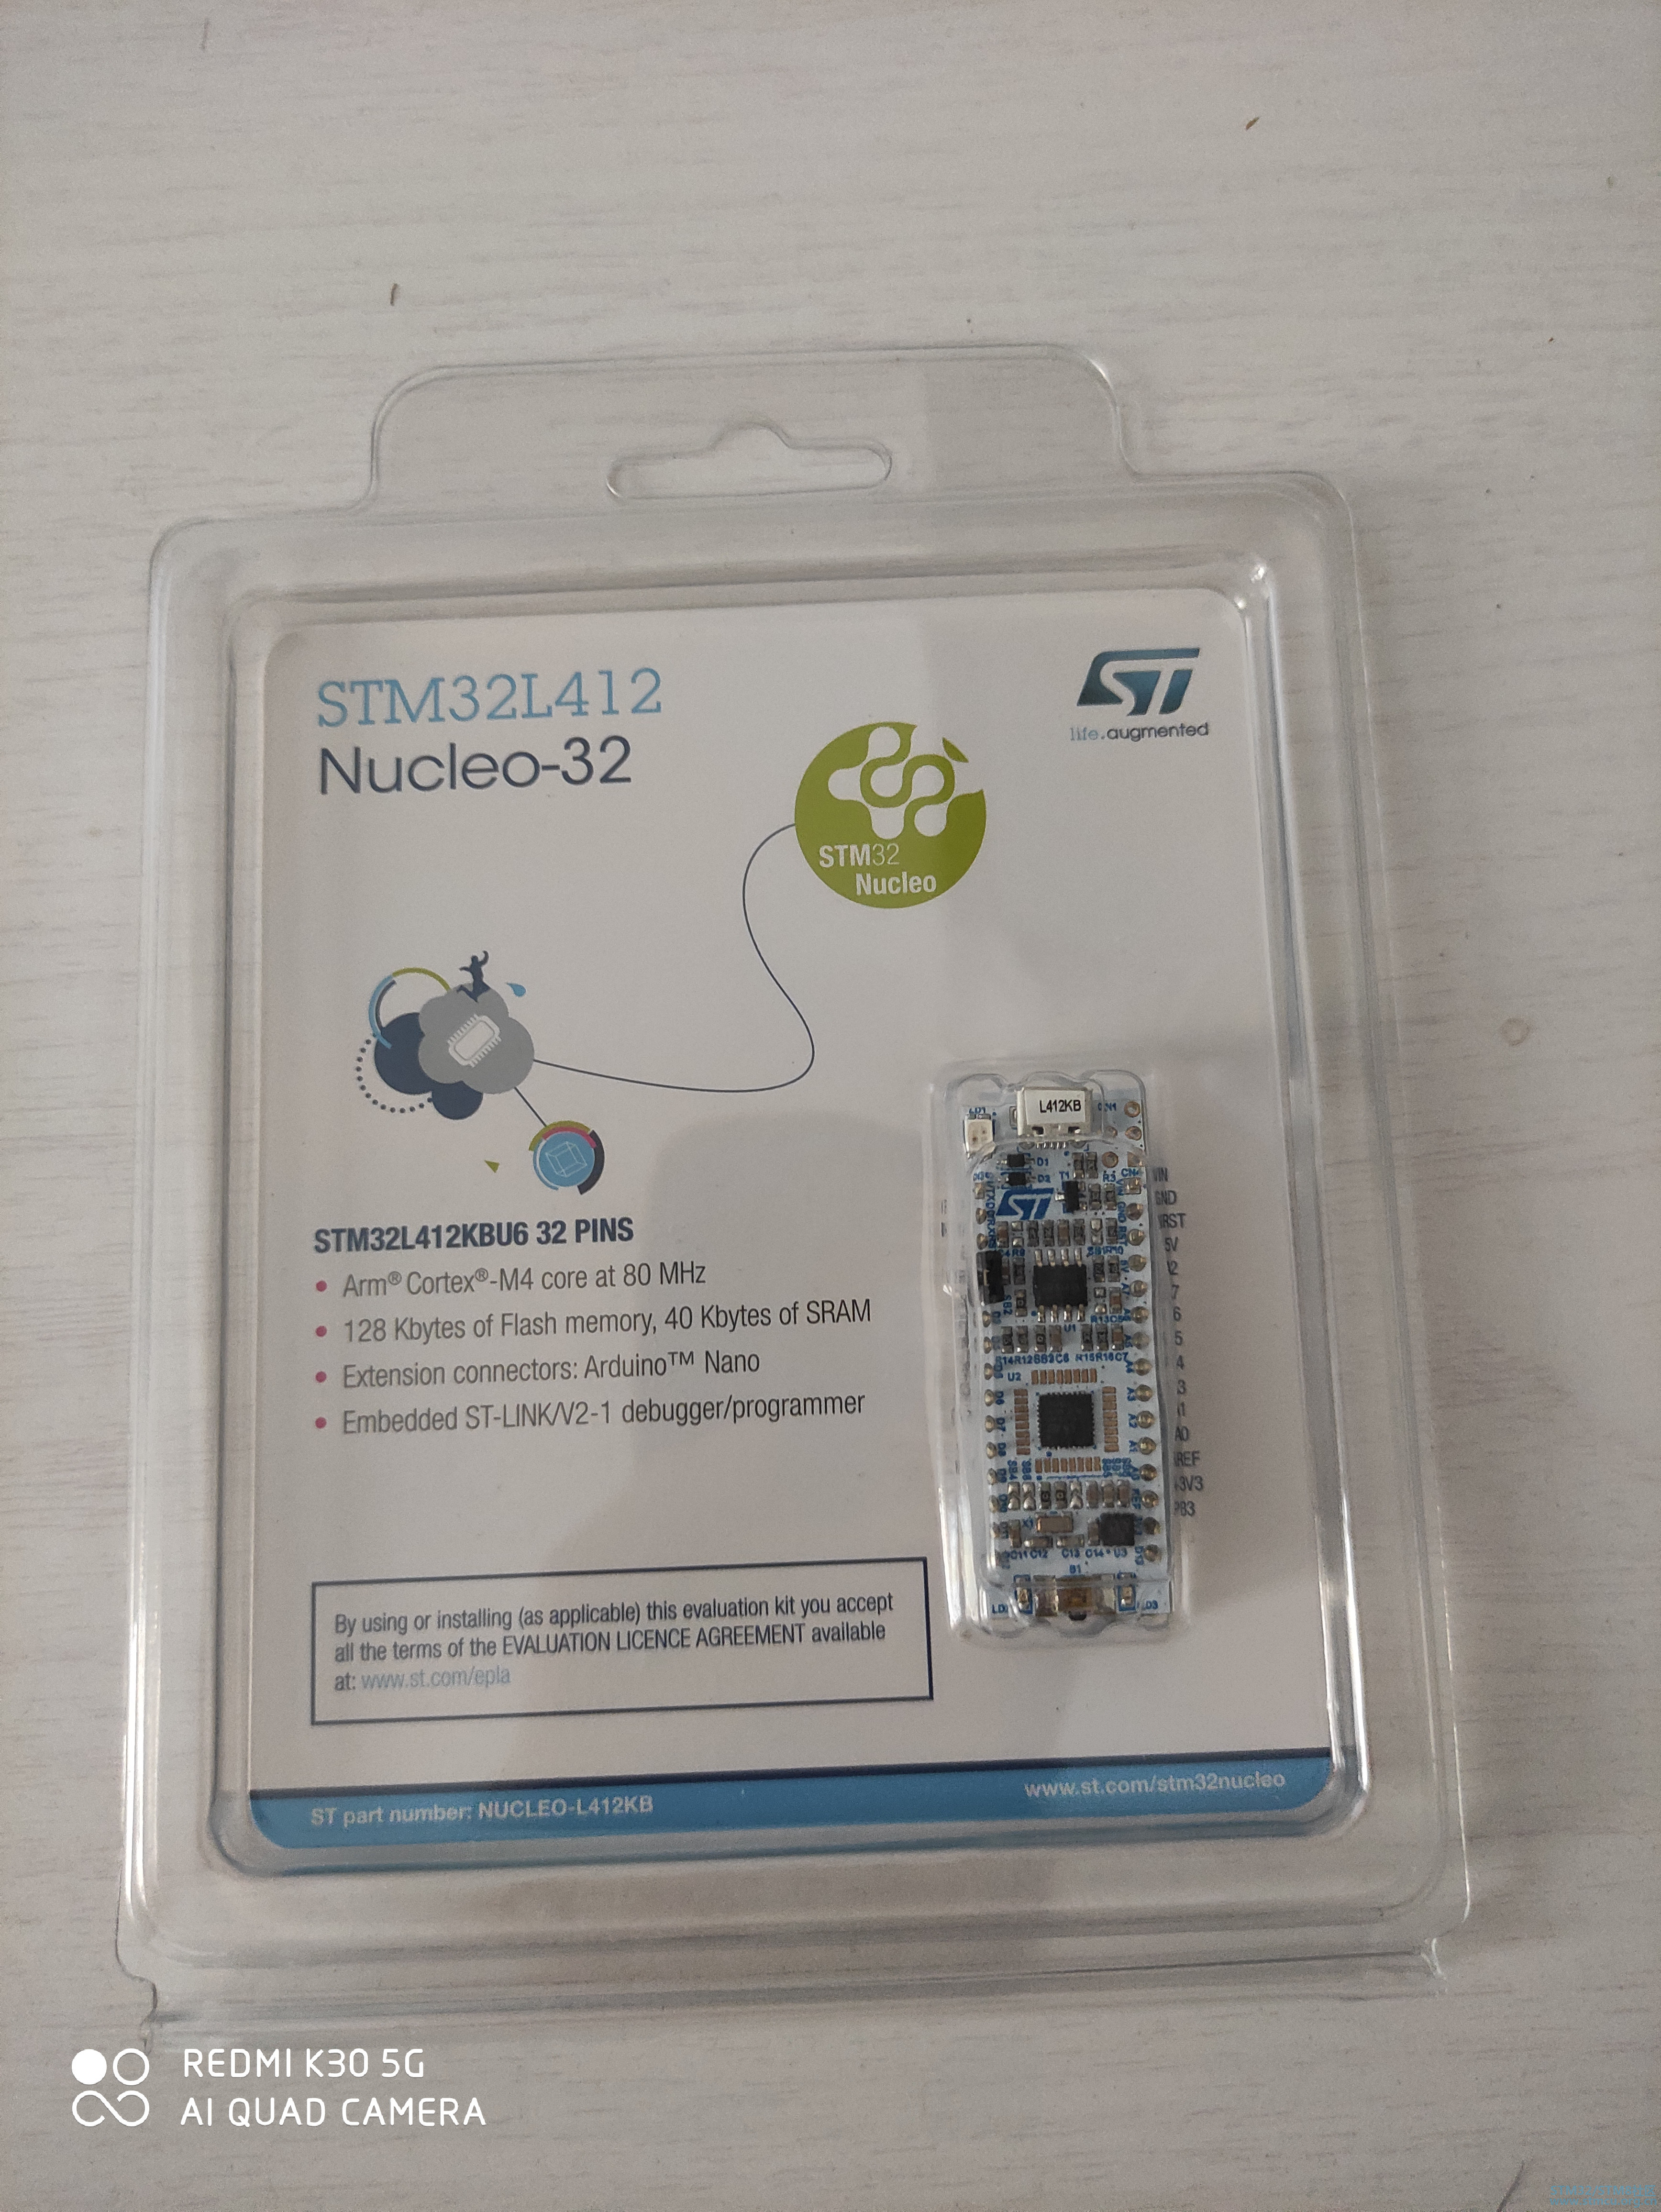 STM32L412 Nucleo-32.jpg